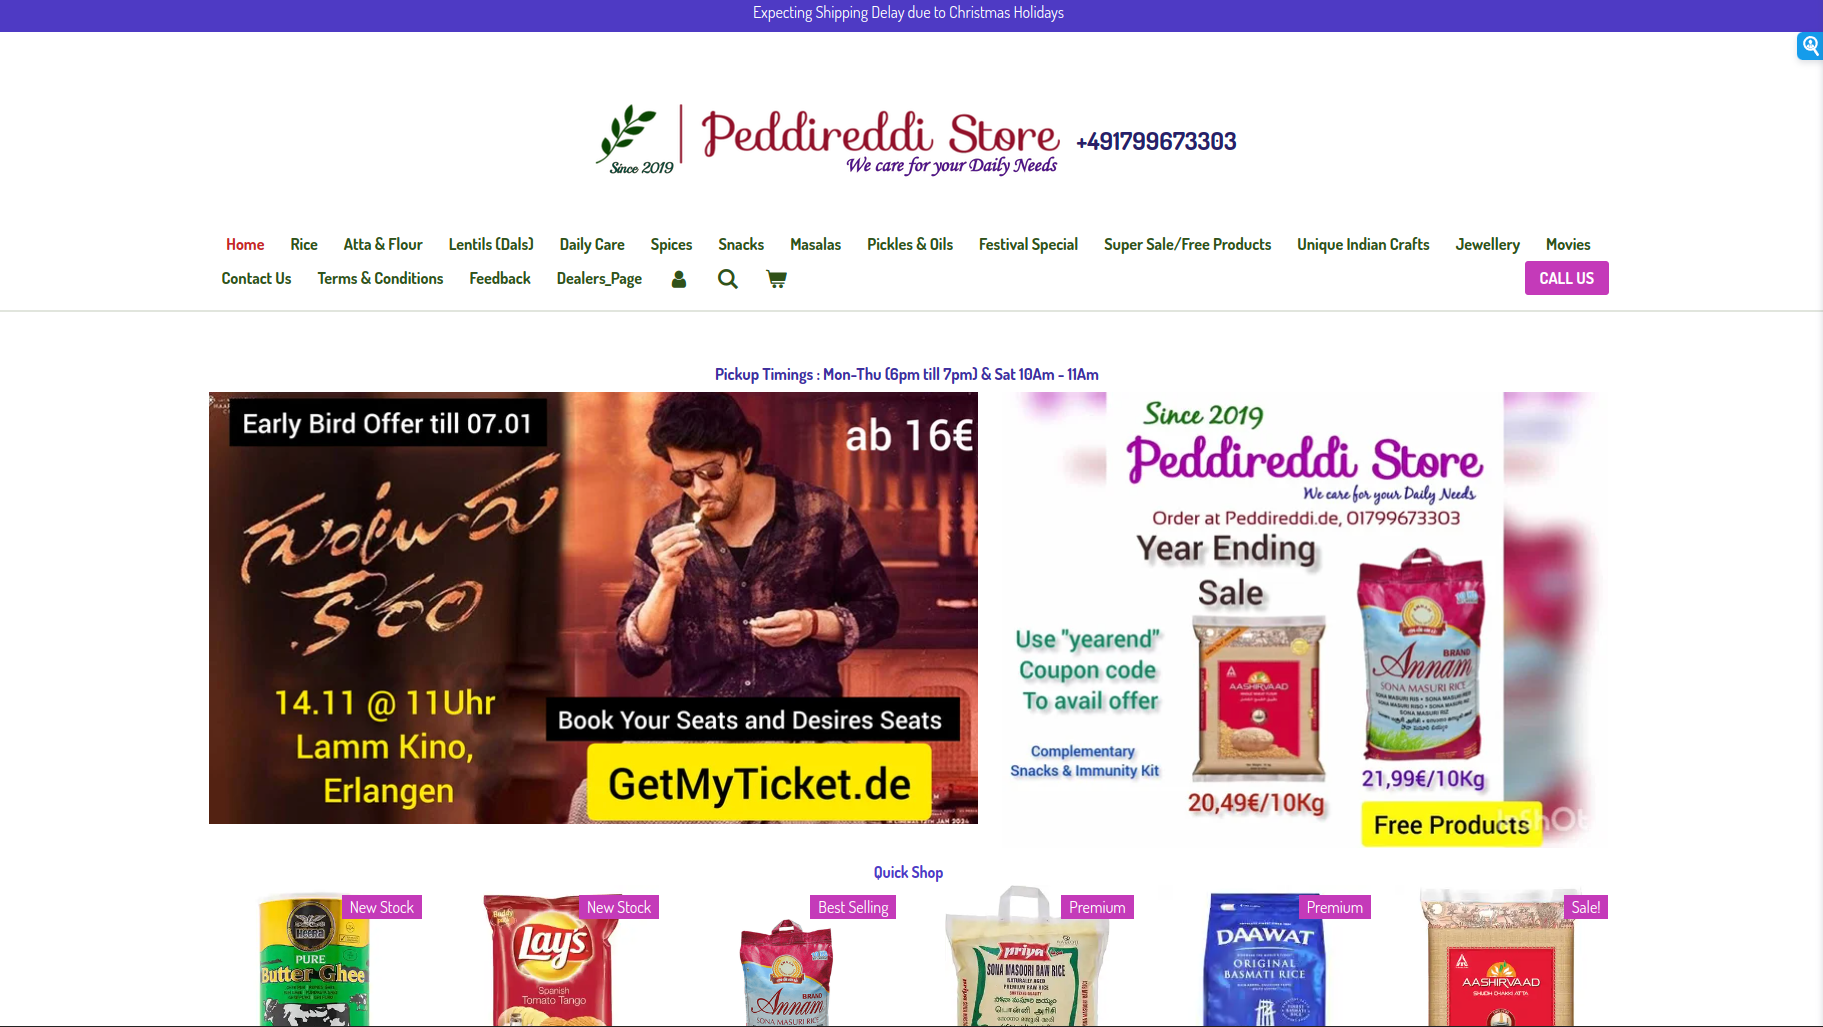 Indian groceries on peddireddi store (Home page of peddireddi.de)